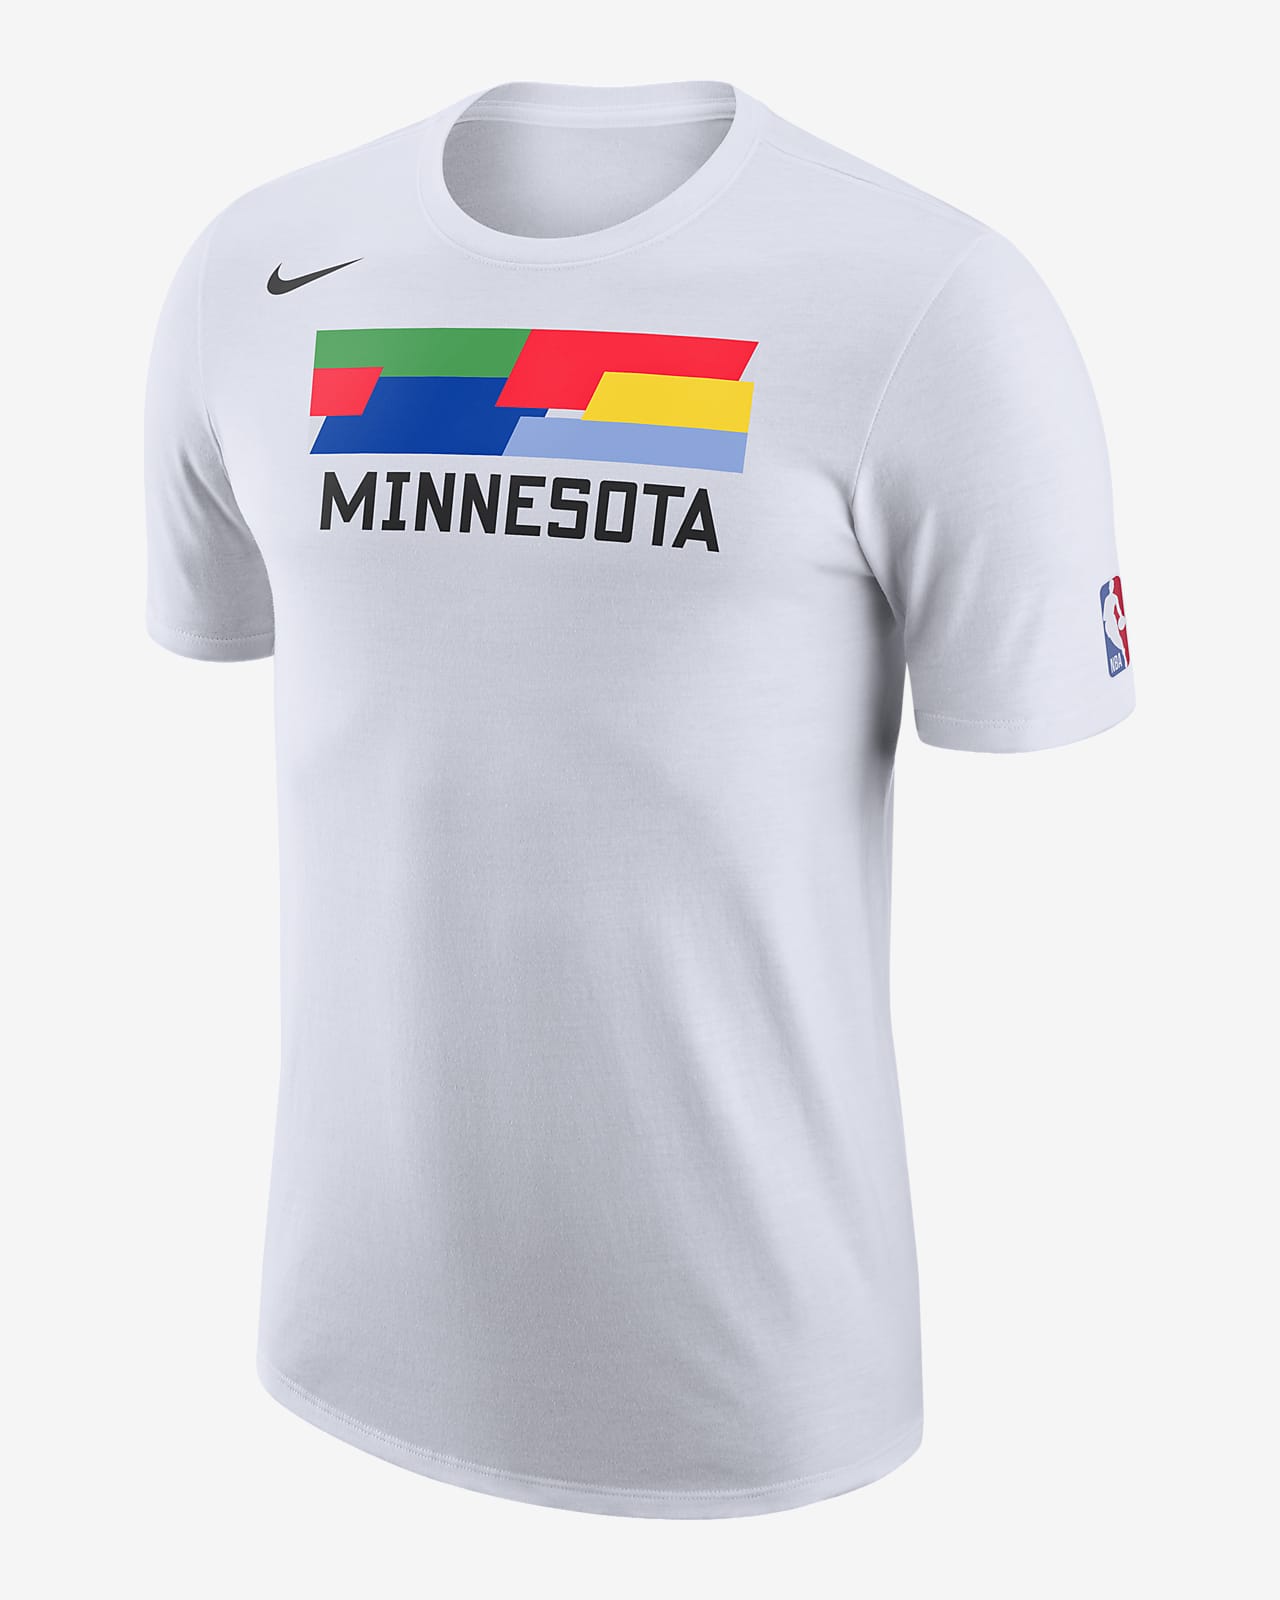 Playera con logotipo Nike de NBA hombre Minnesota Timberwolves City Edition.